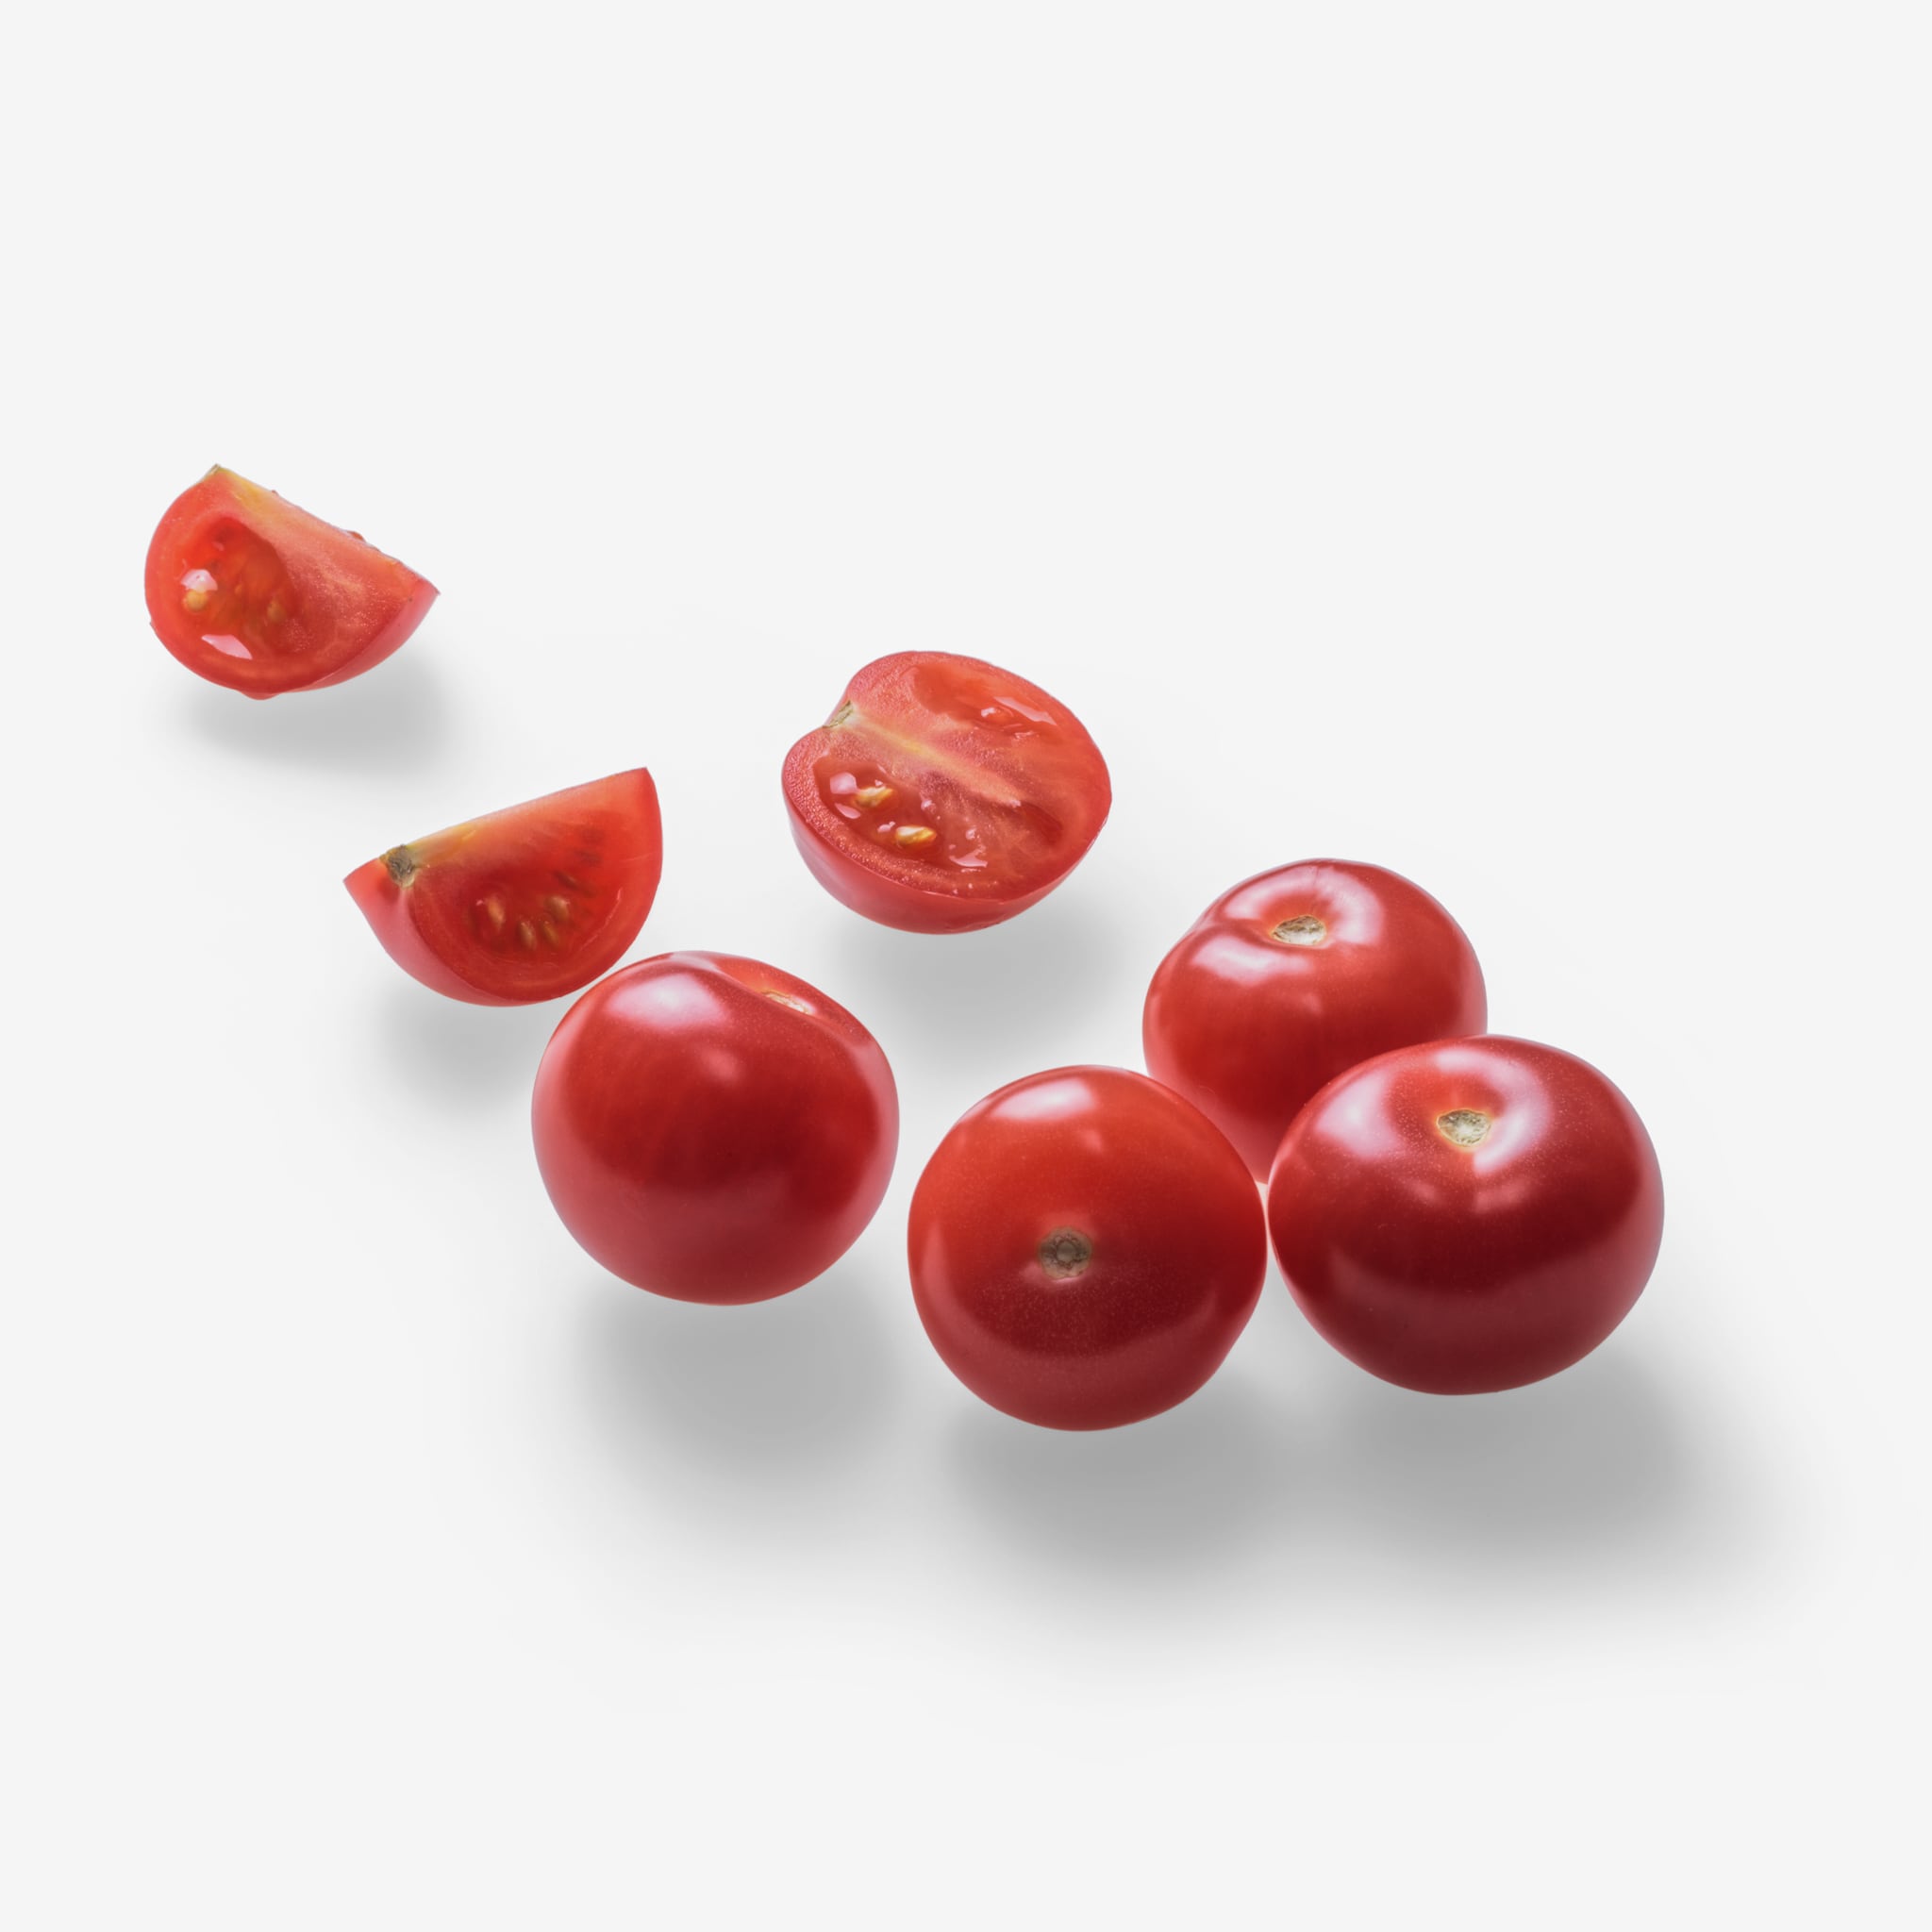 Tomato PSD isolated image